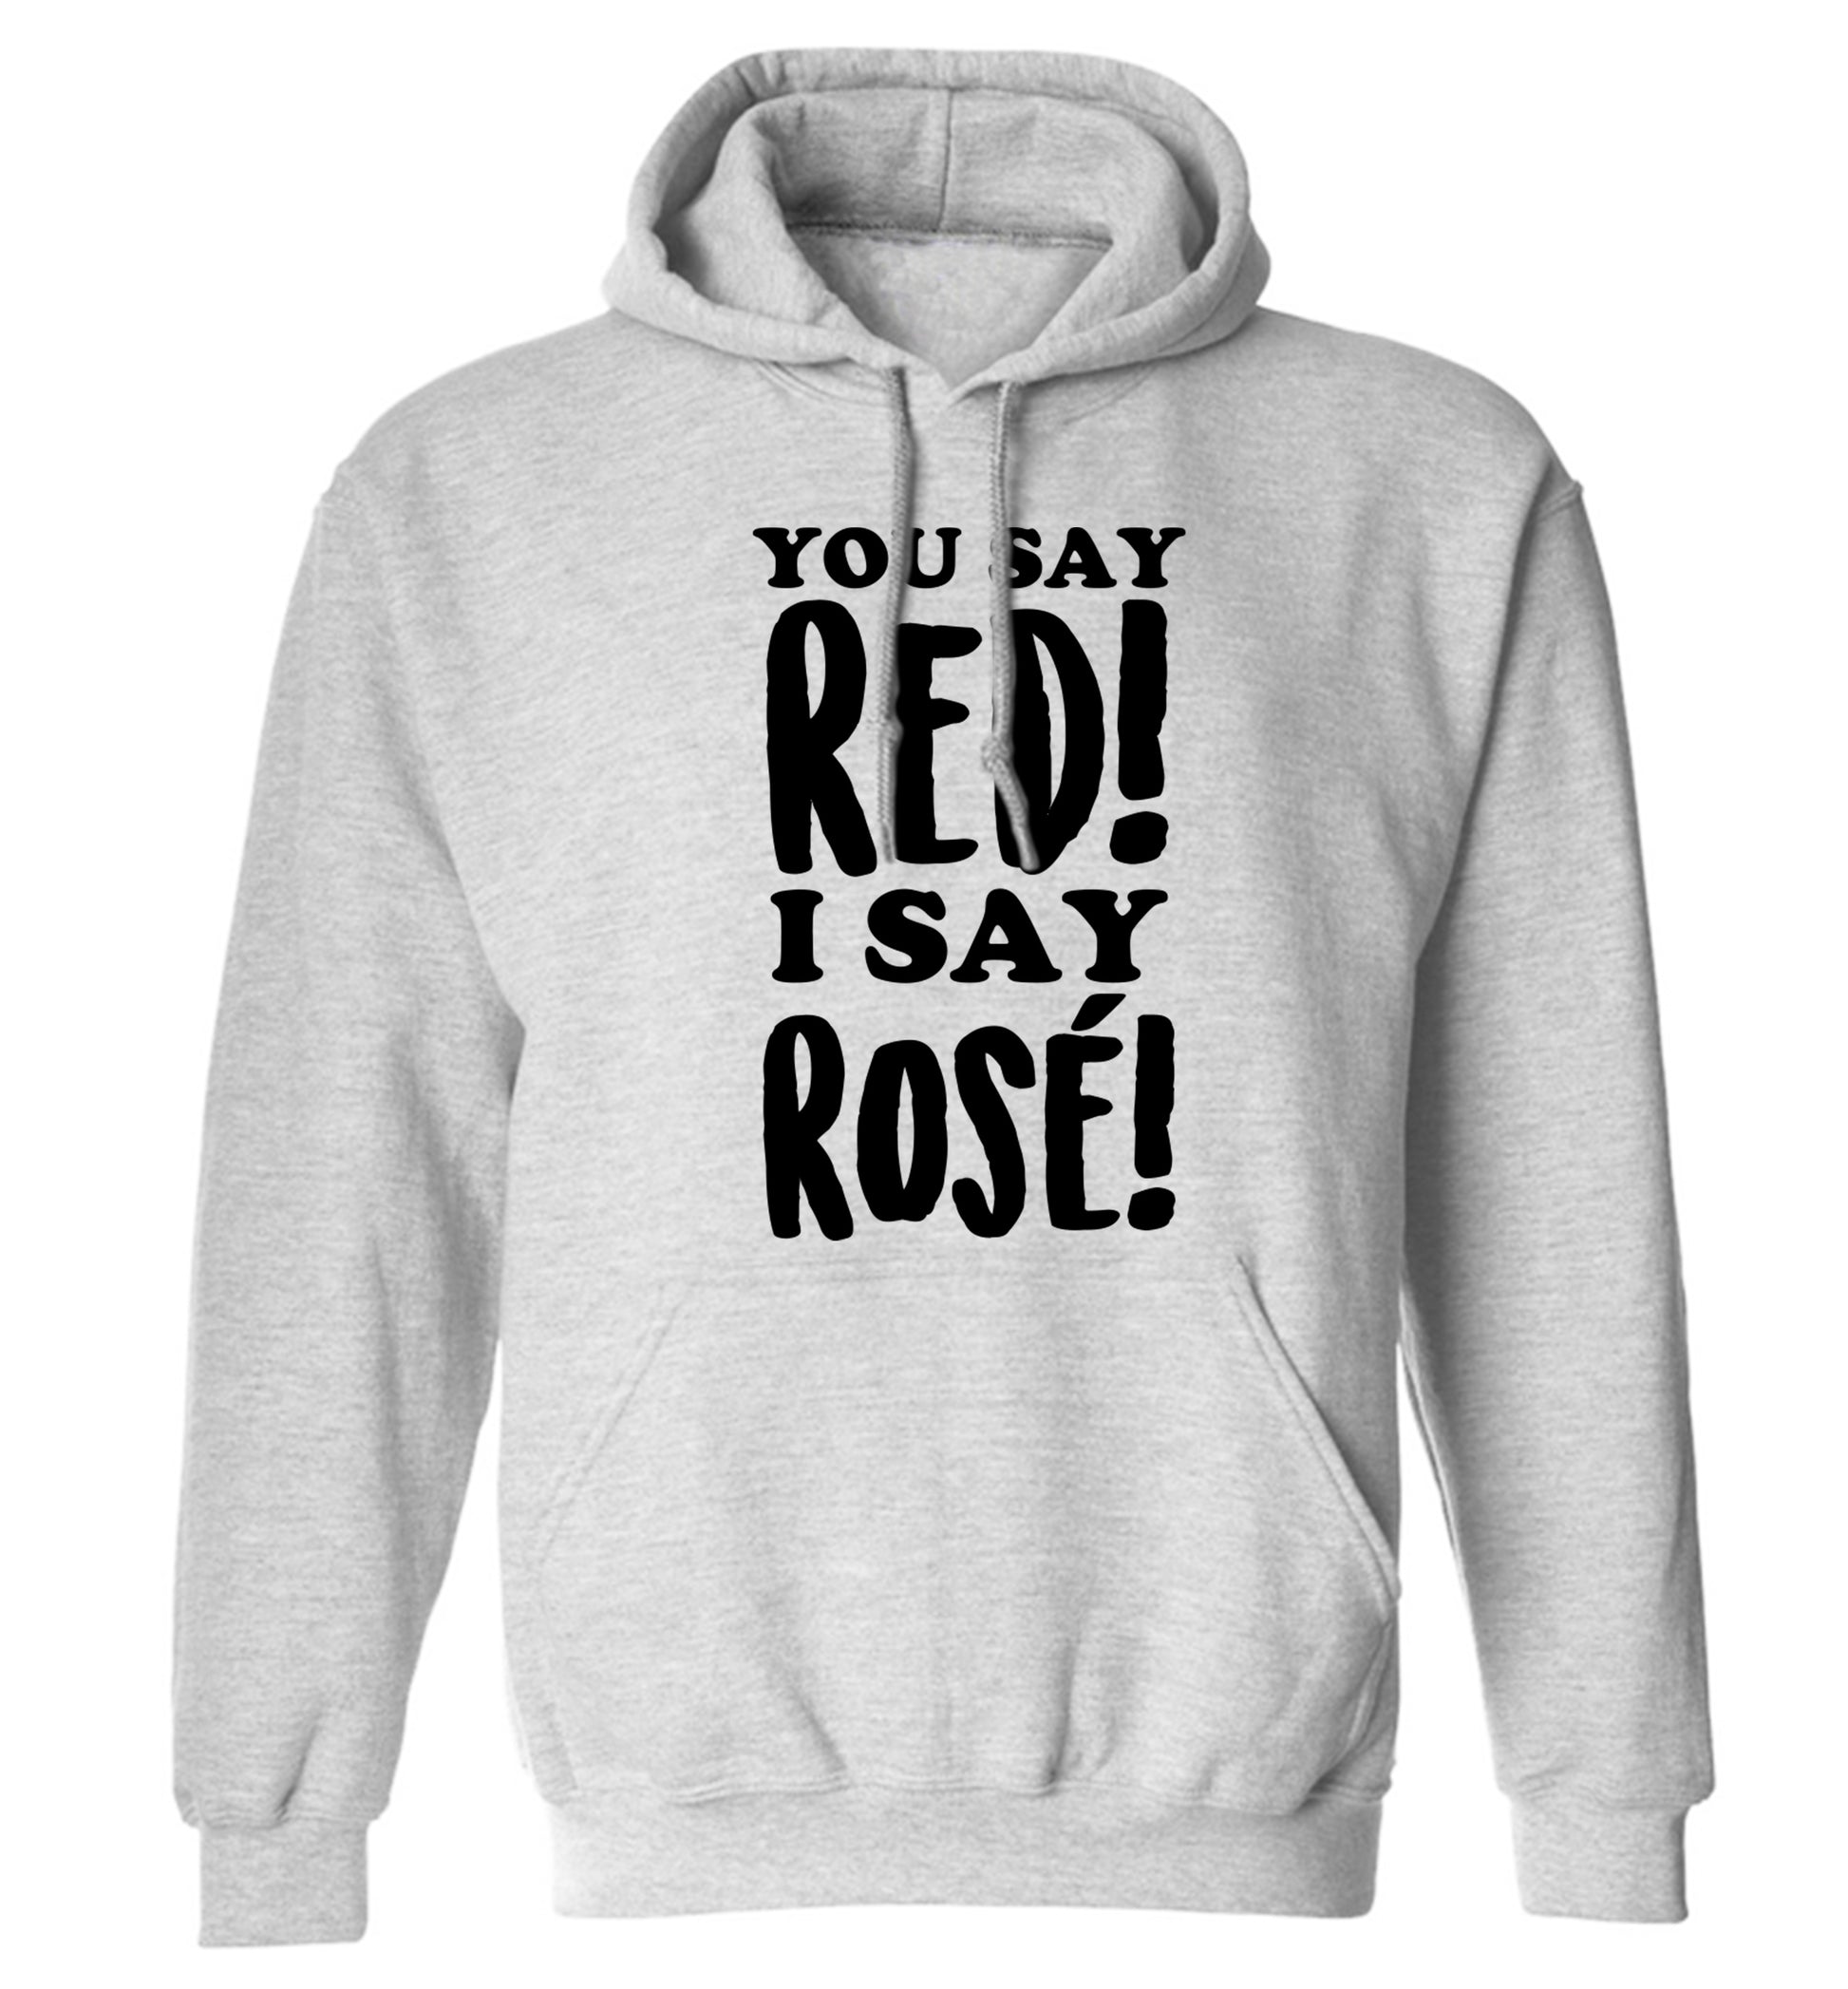 You say red I say ros‚àö√â¬¨¬© adults unisex grey hoodie 2XL